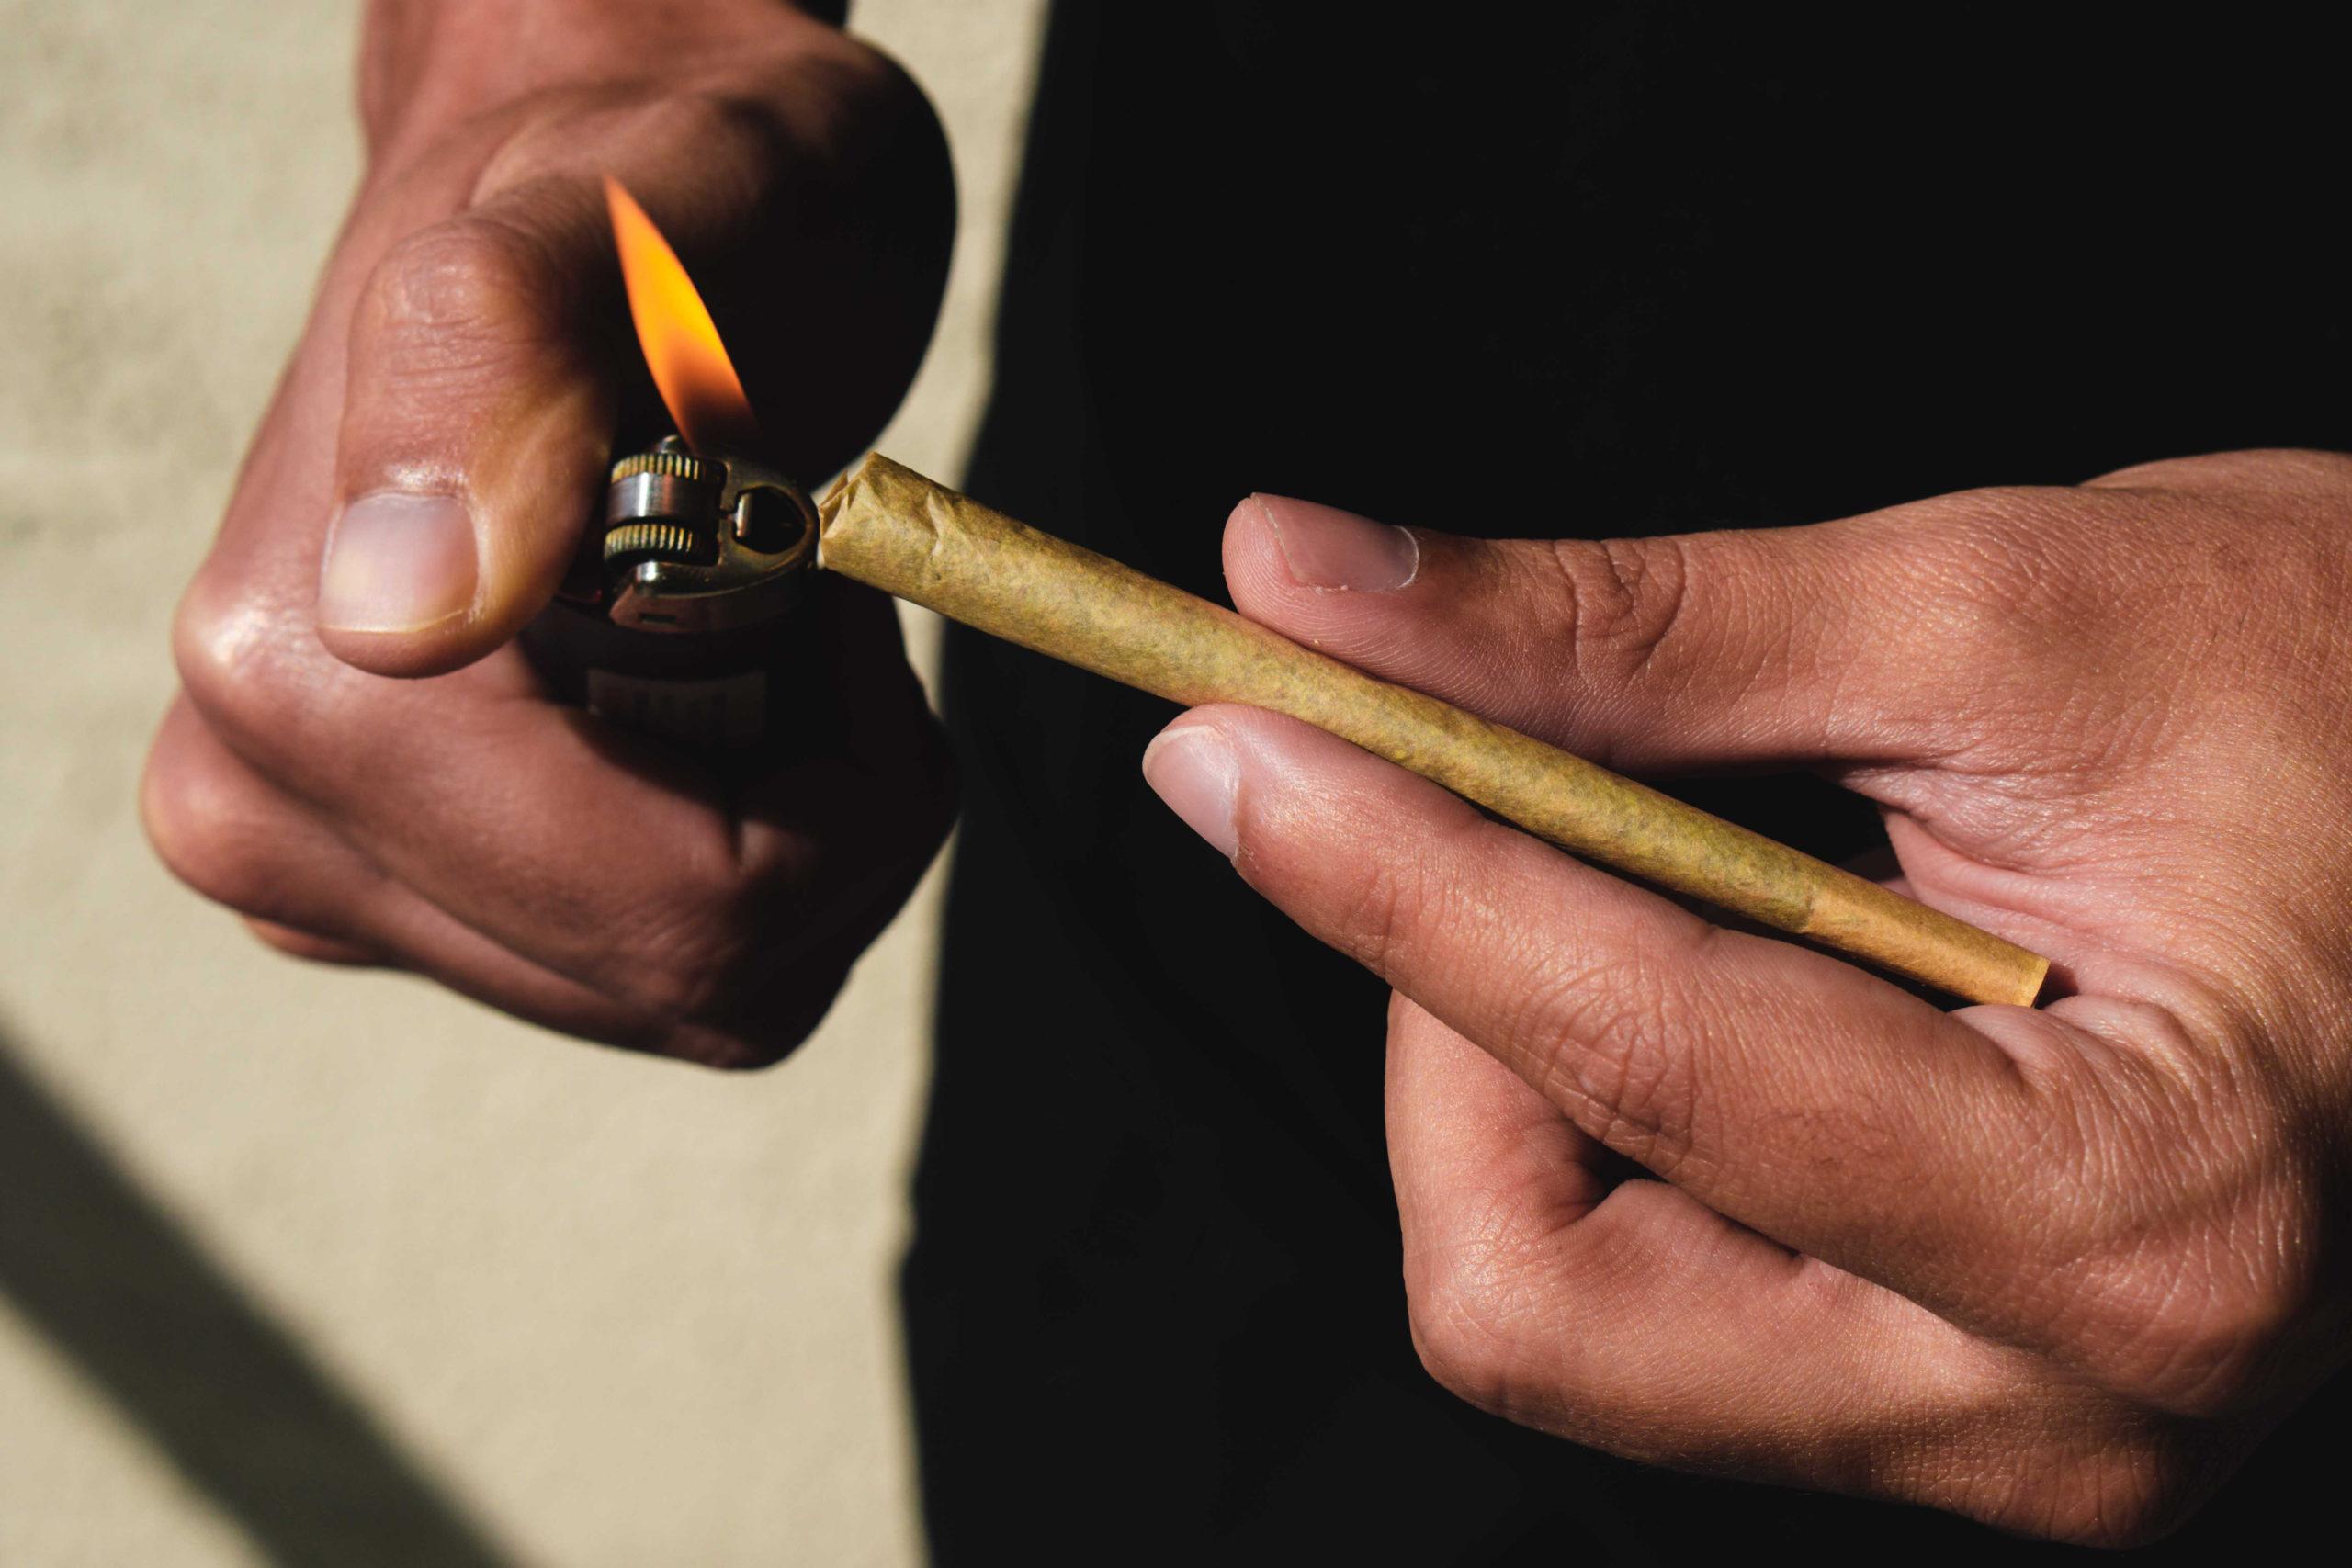 Benefits of Cannabis Pre-rolls